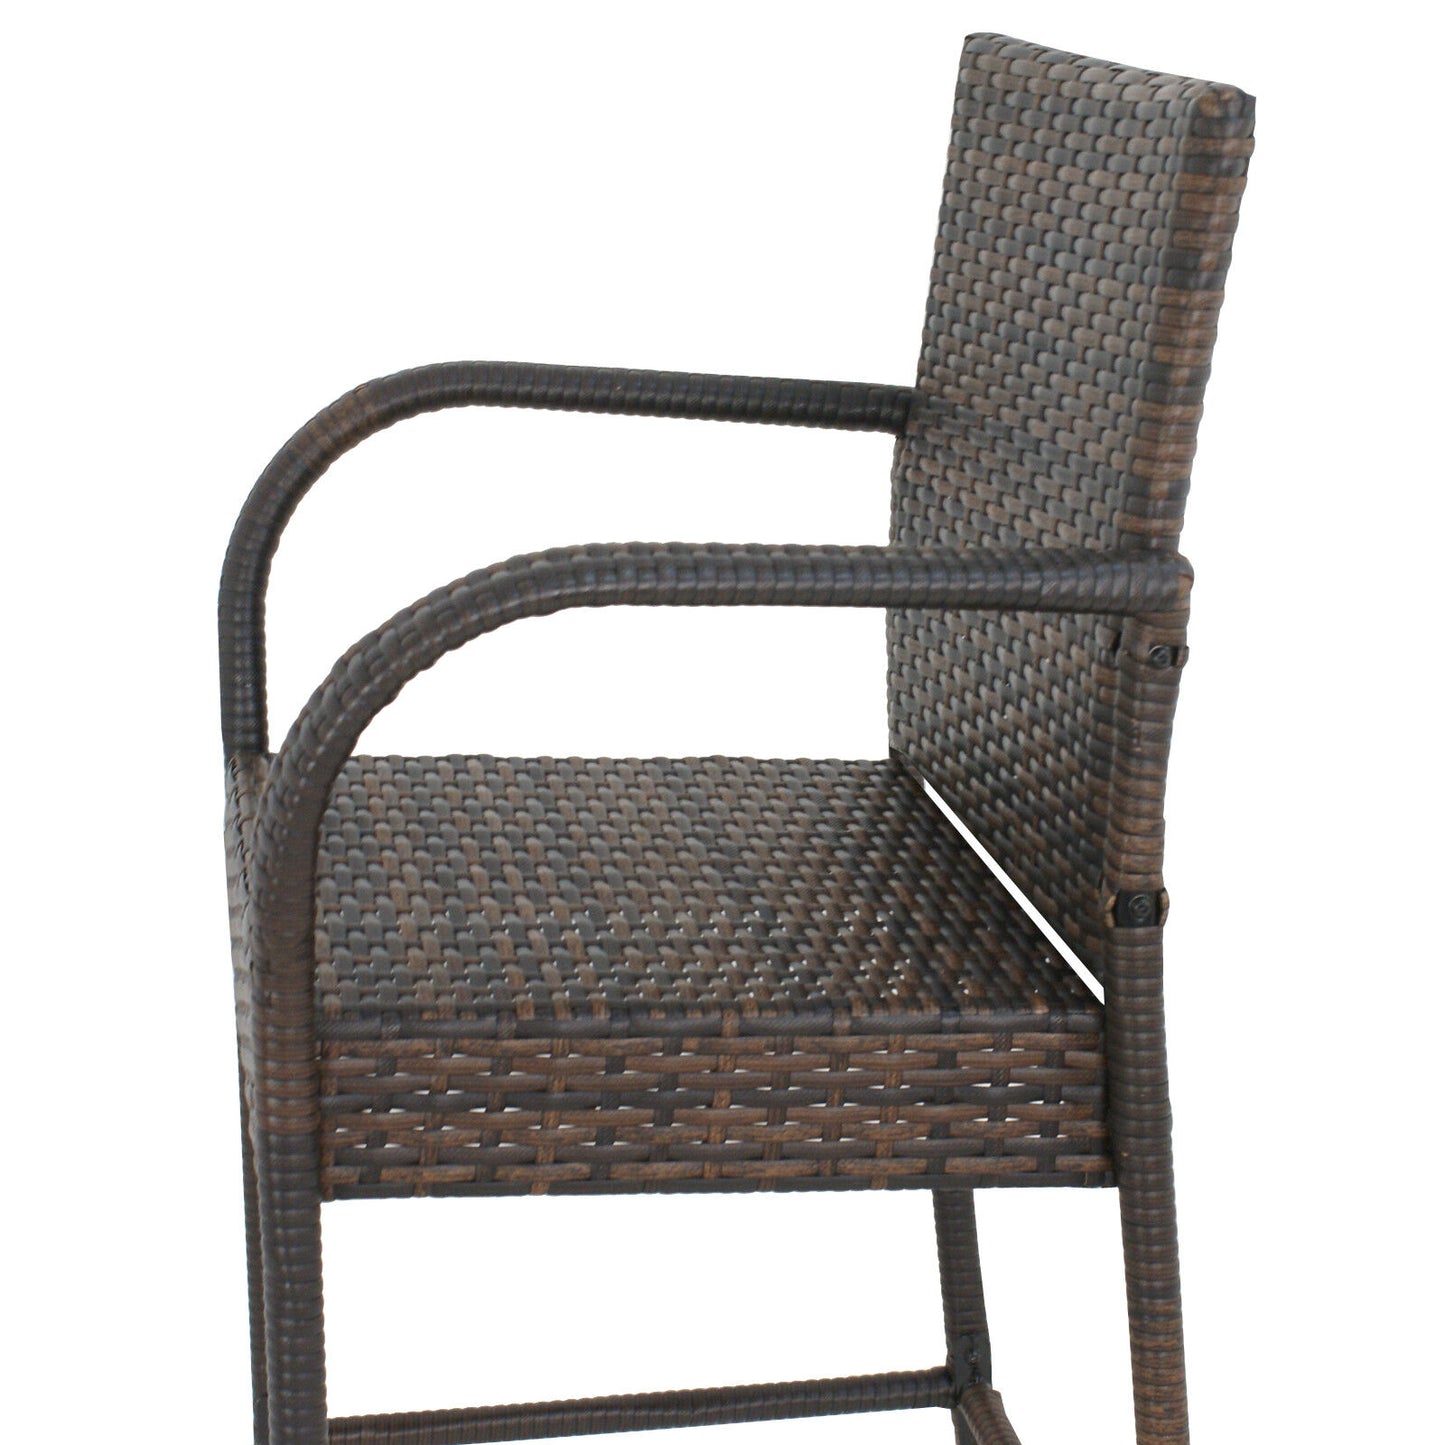 2PCS Rattan Wicker Bar Stool Outdoor Backyard Patio Furniture Chair with Armrest